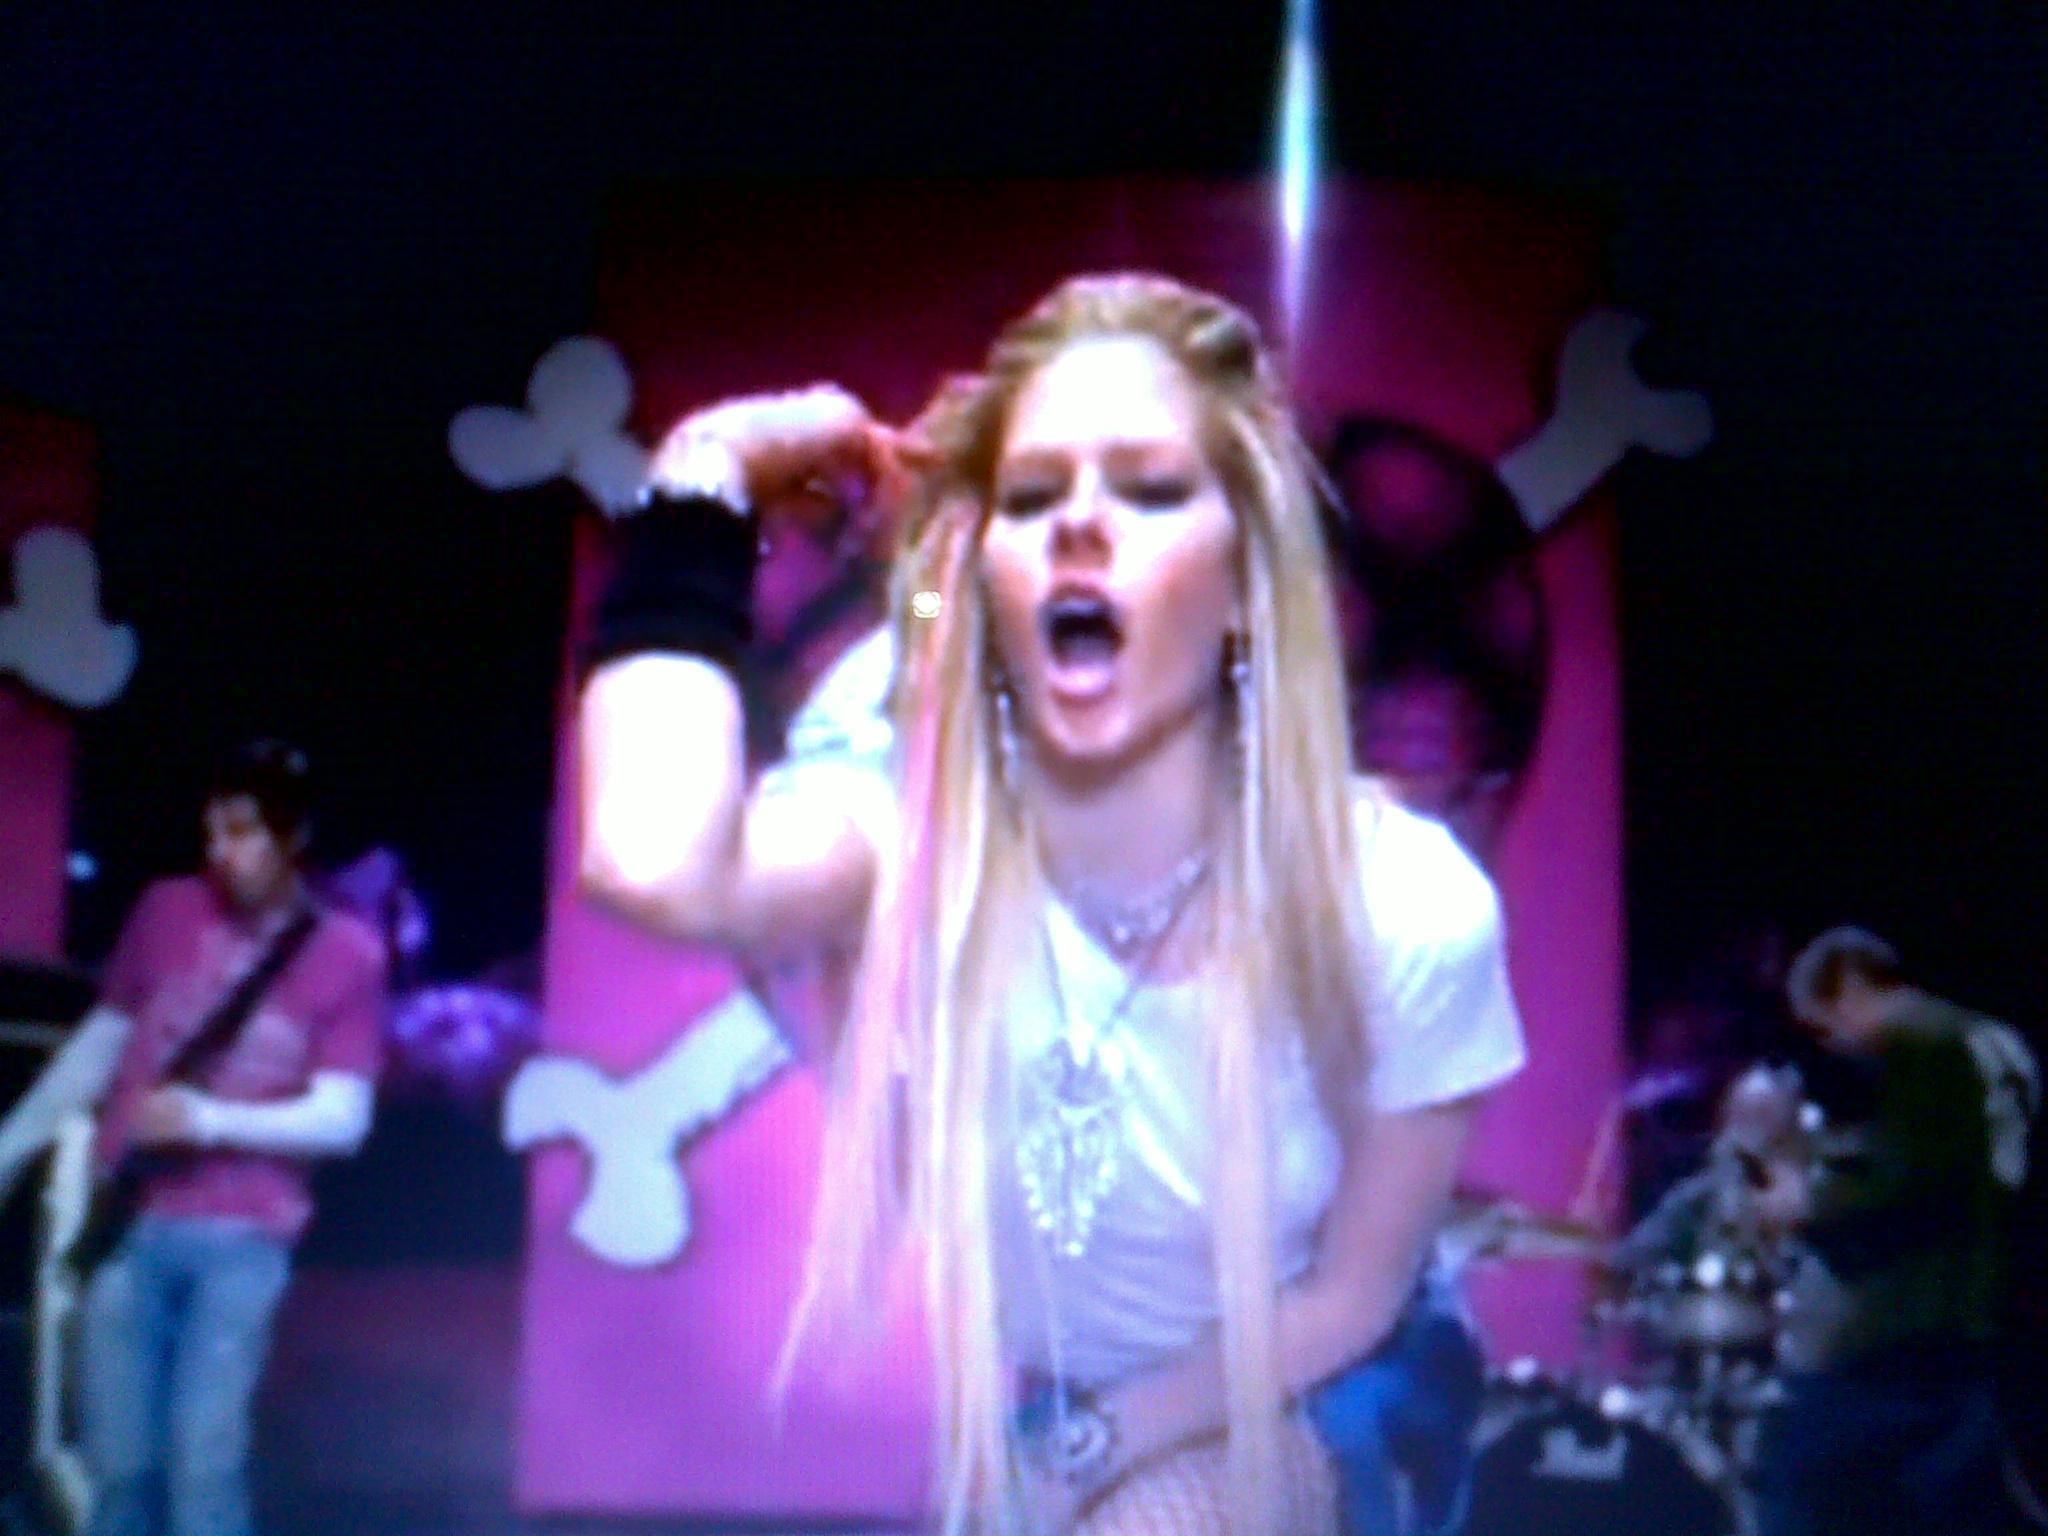 Music video - Girlfriend - Avril Lavigne Image (16184168) - Fanpop